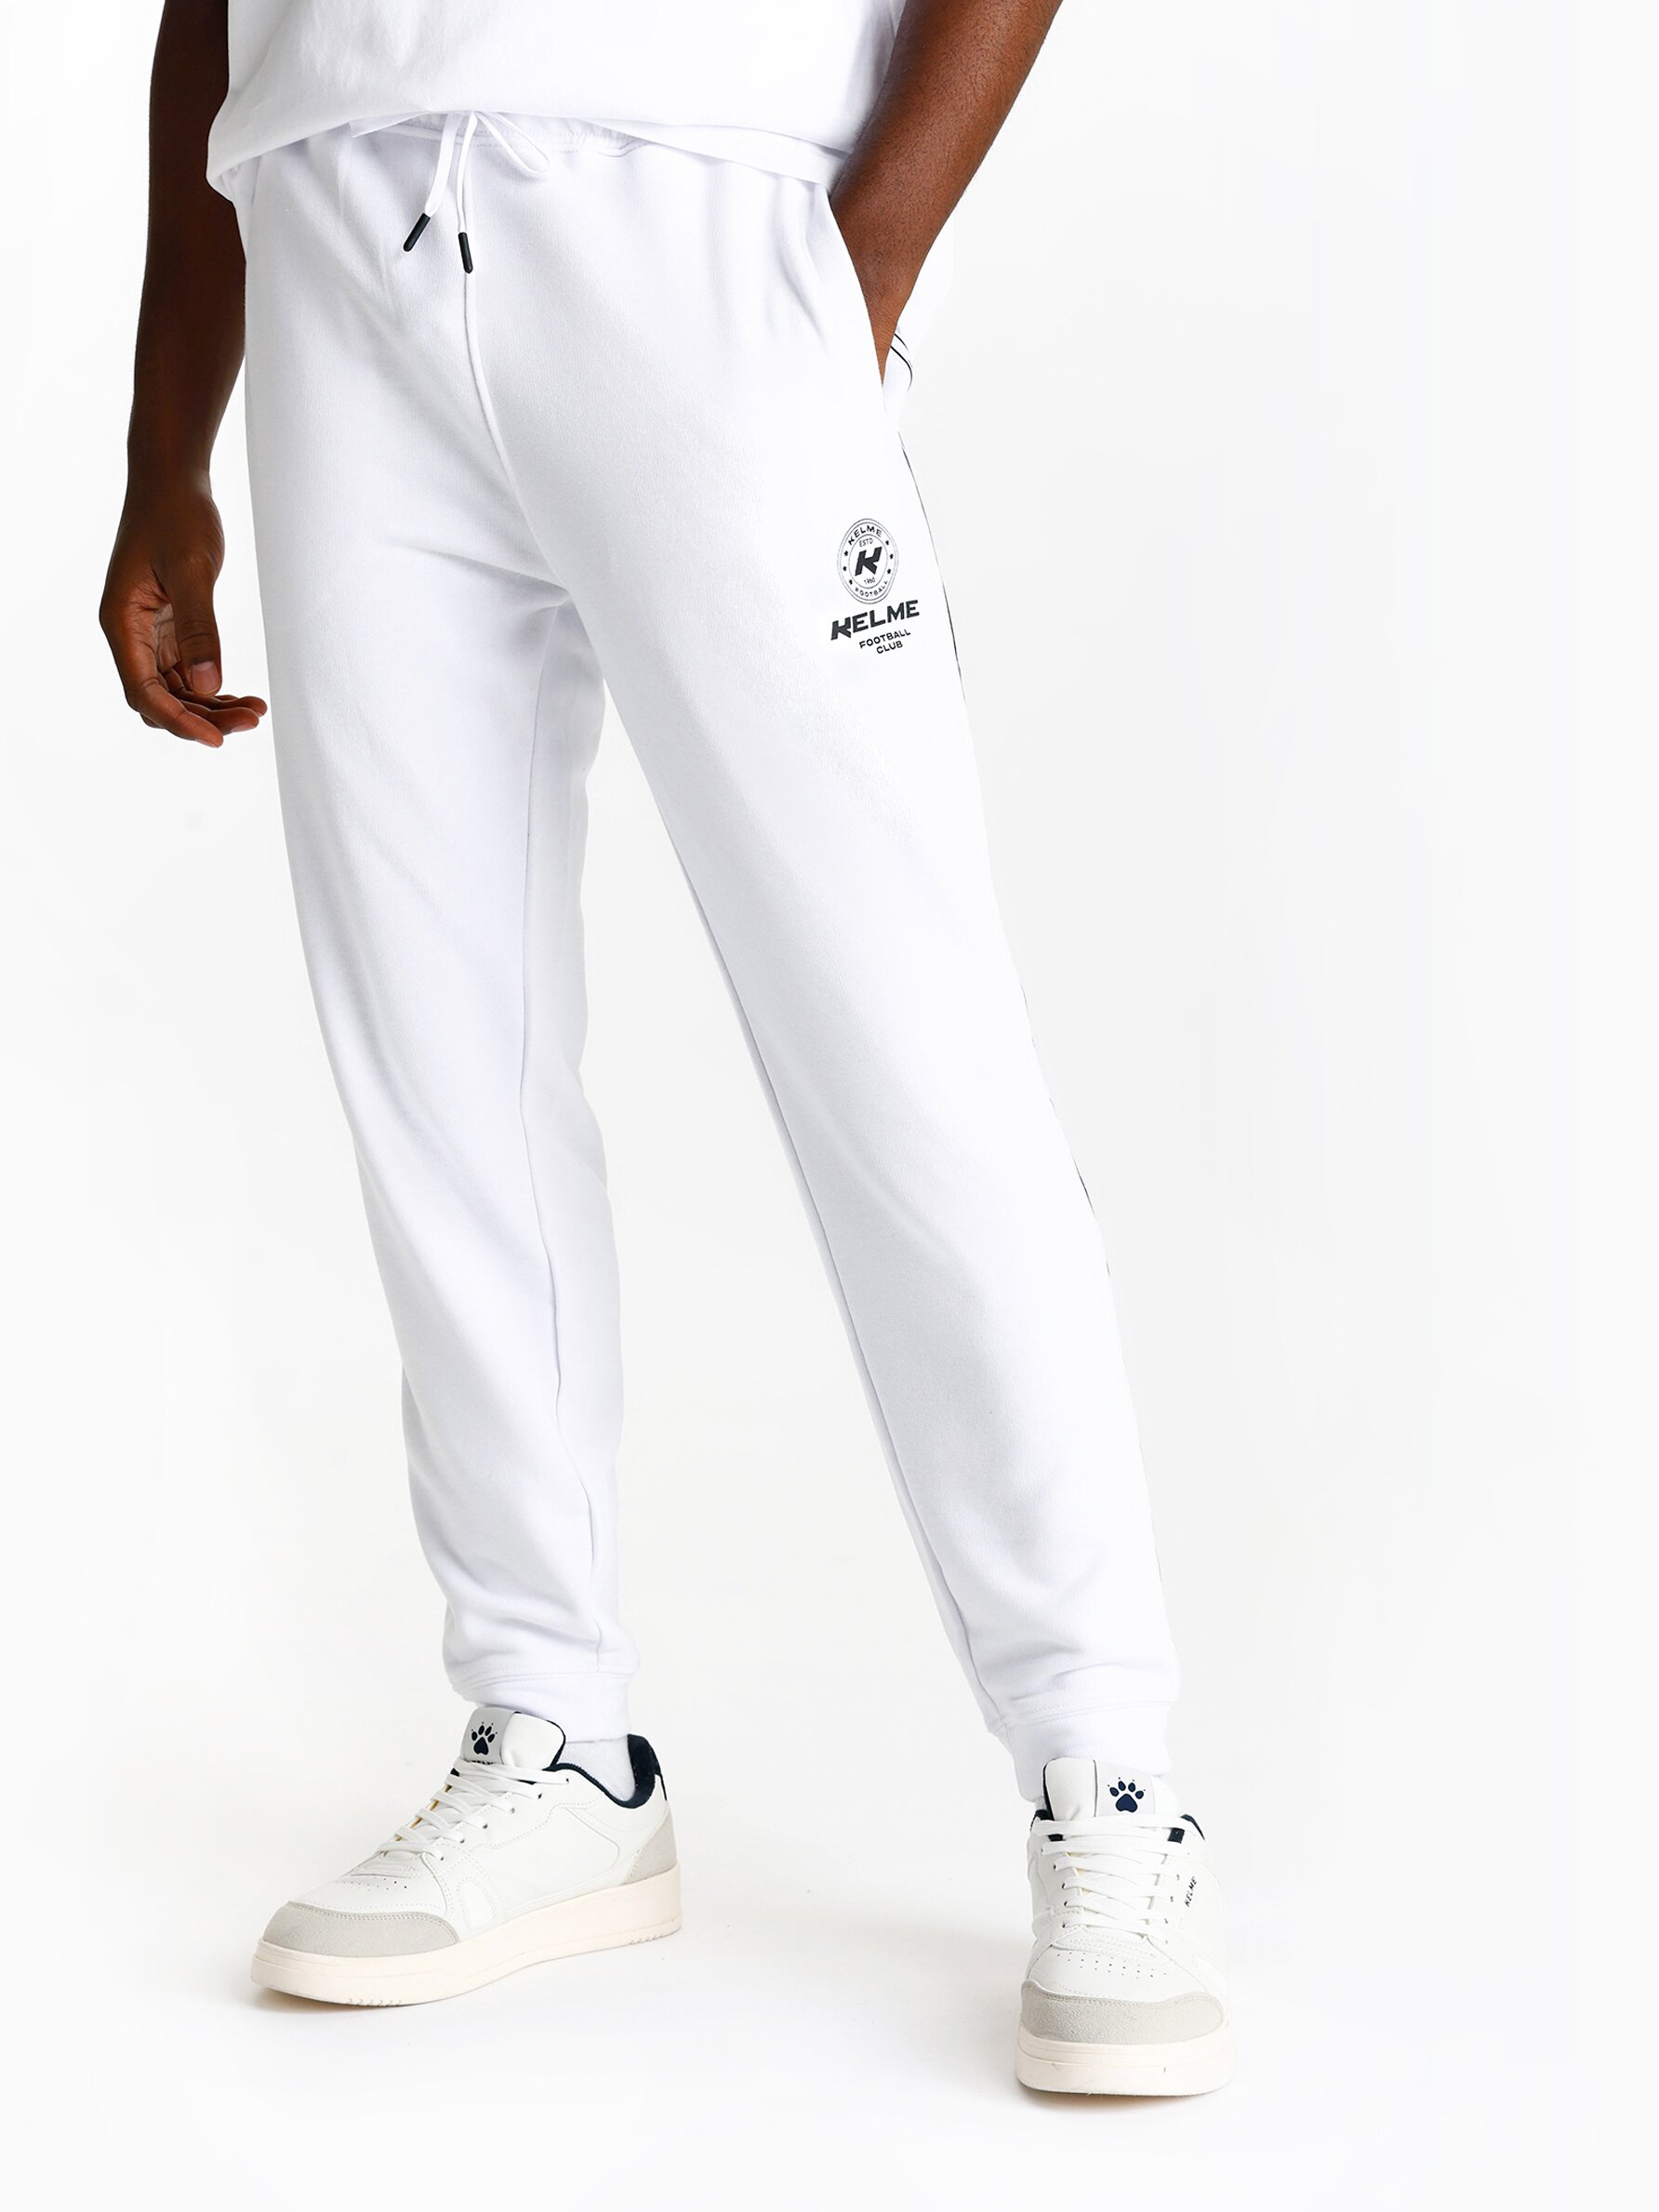 Marie Claire Pants Marie Claire Sport Side Tape White Cotton Pants Trousers  - Etsy